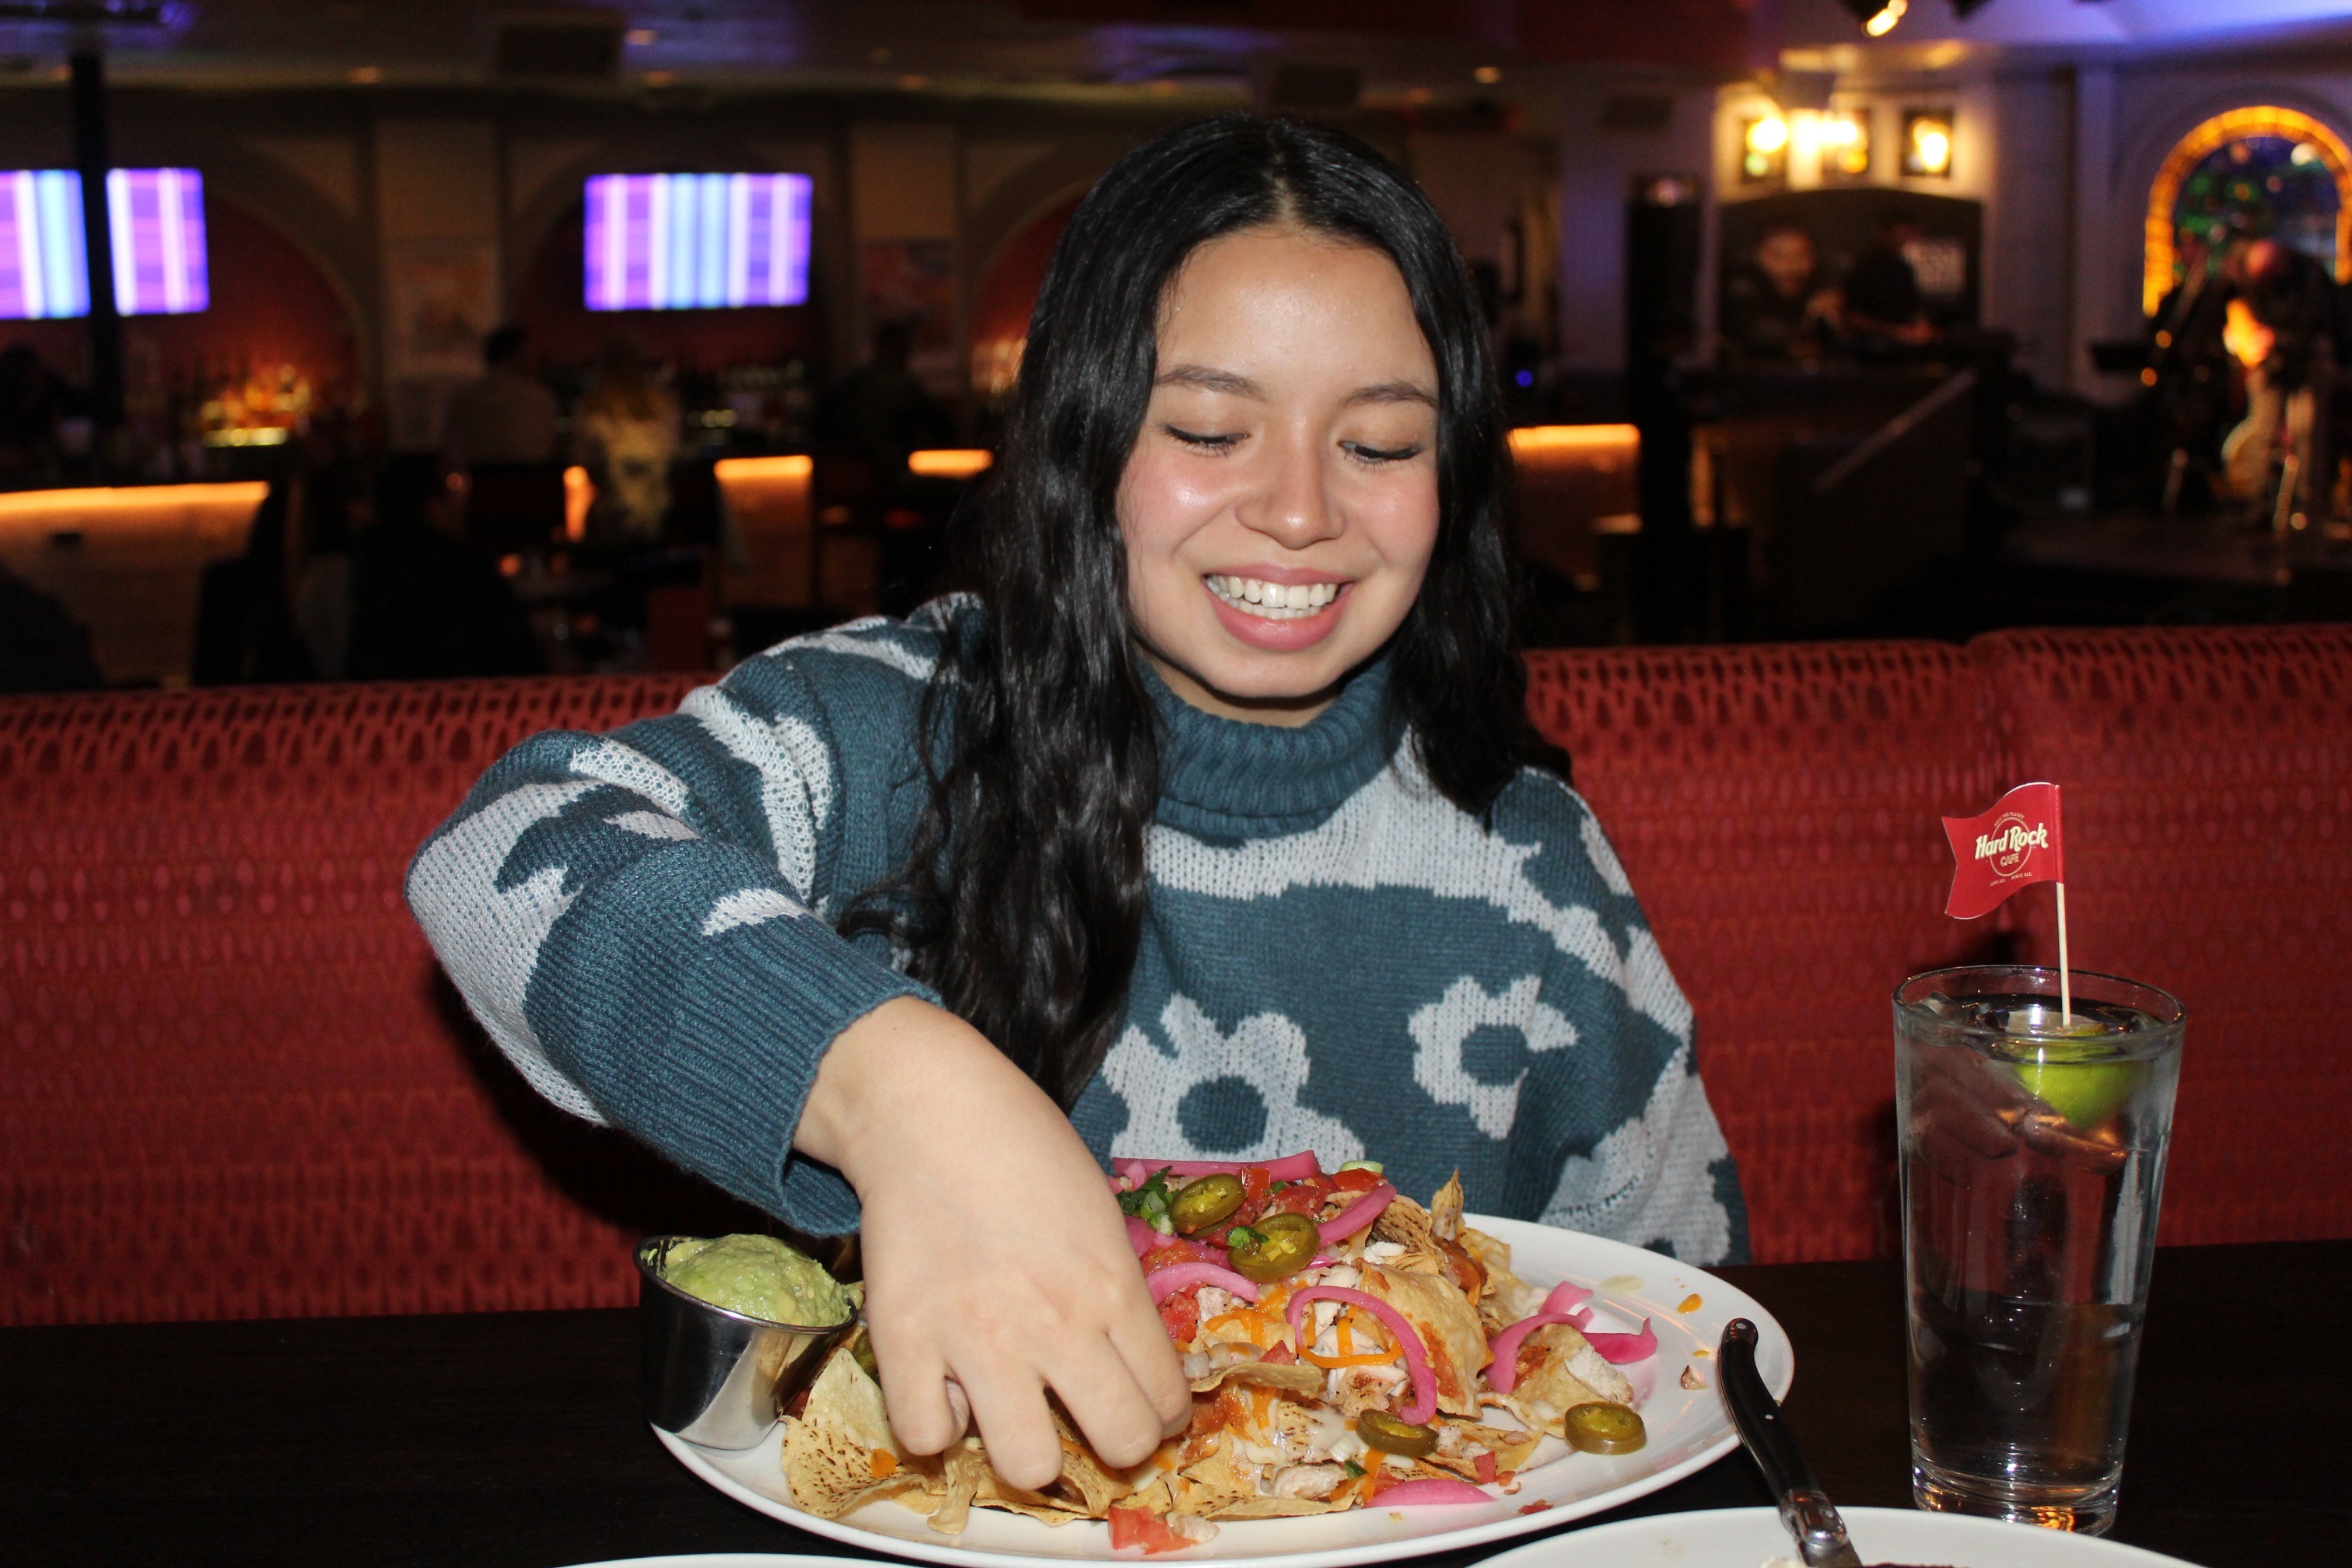 Girl eating nachos at a restaurant.